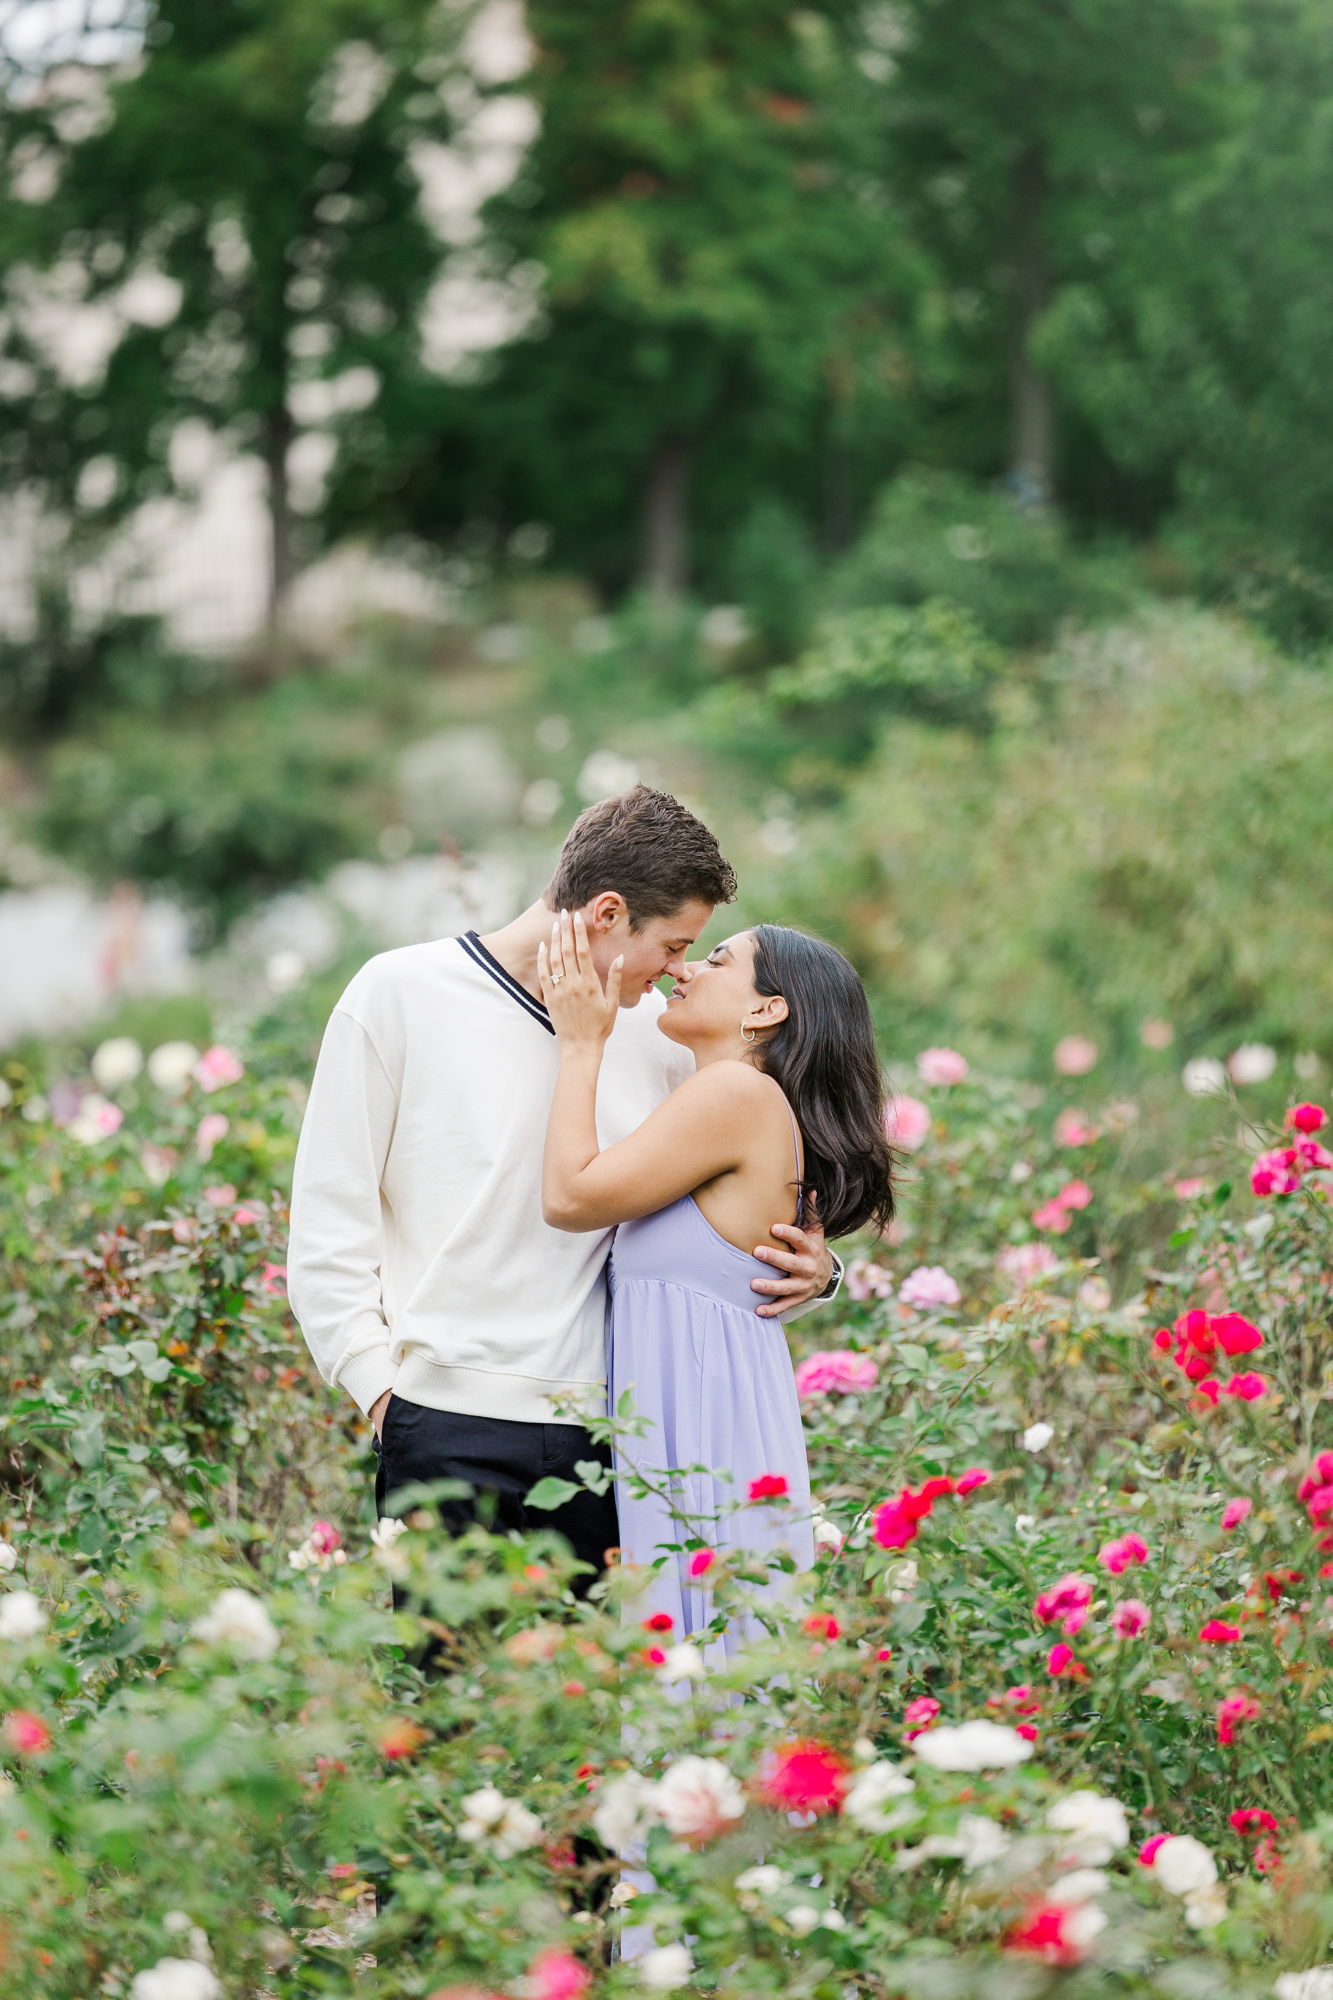 Picturesque Proposal Photos in the Rose Garden at Brooklyn Botanic Garden